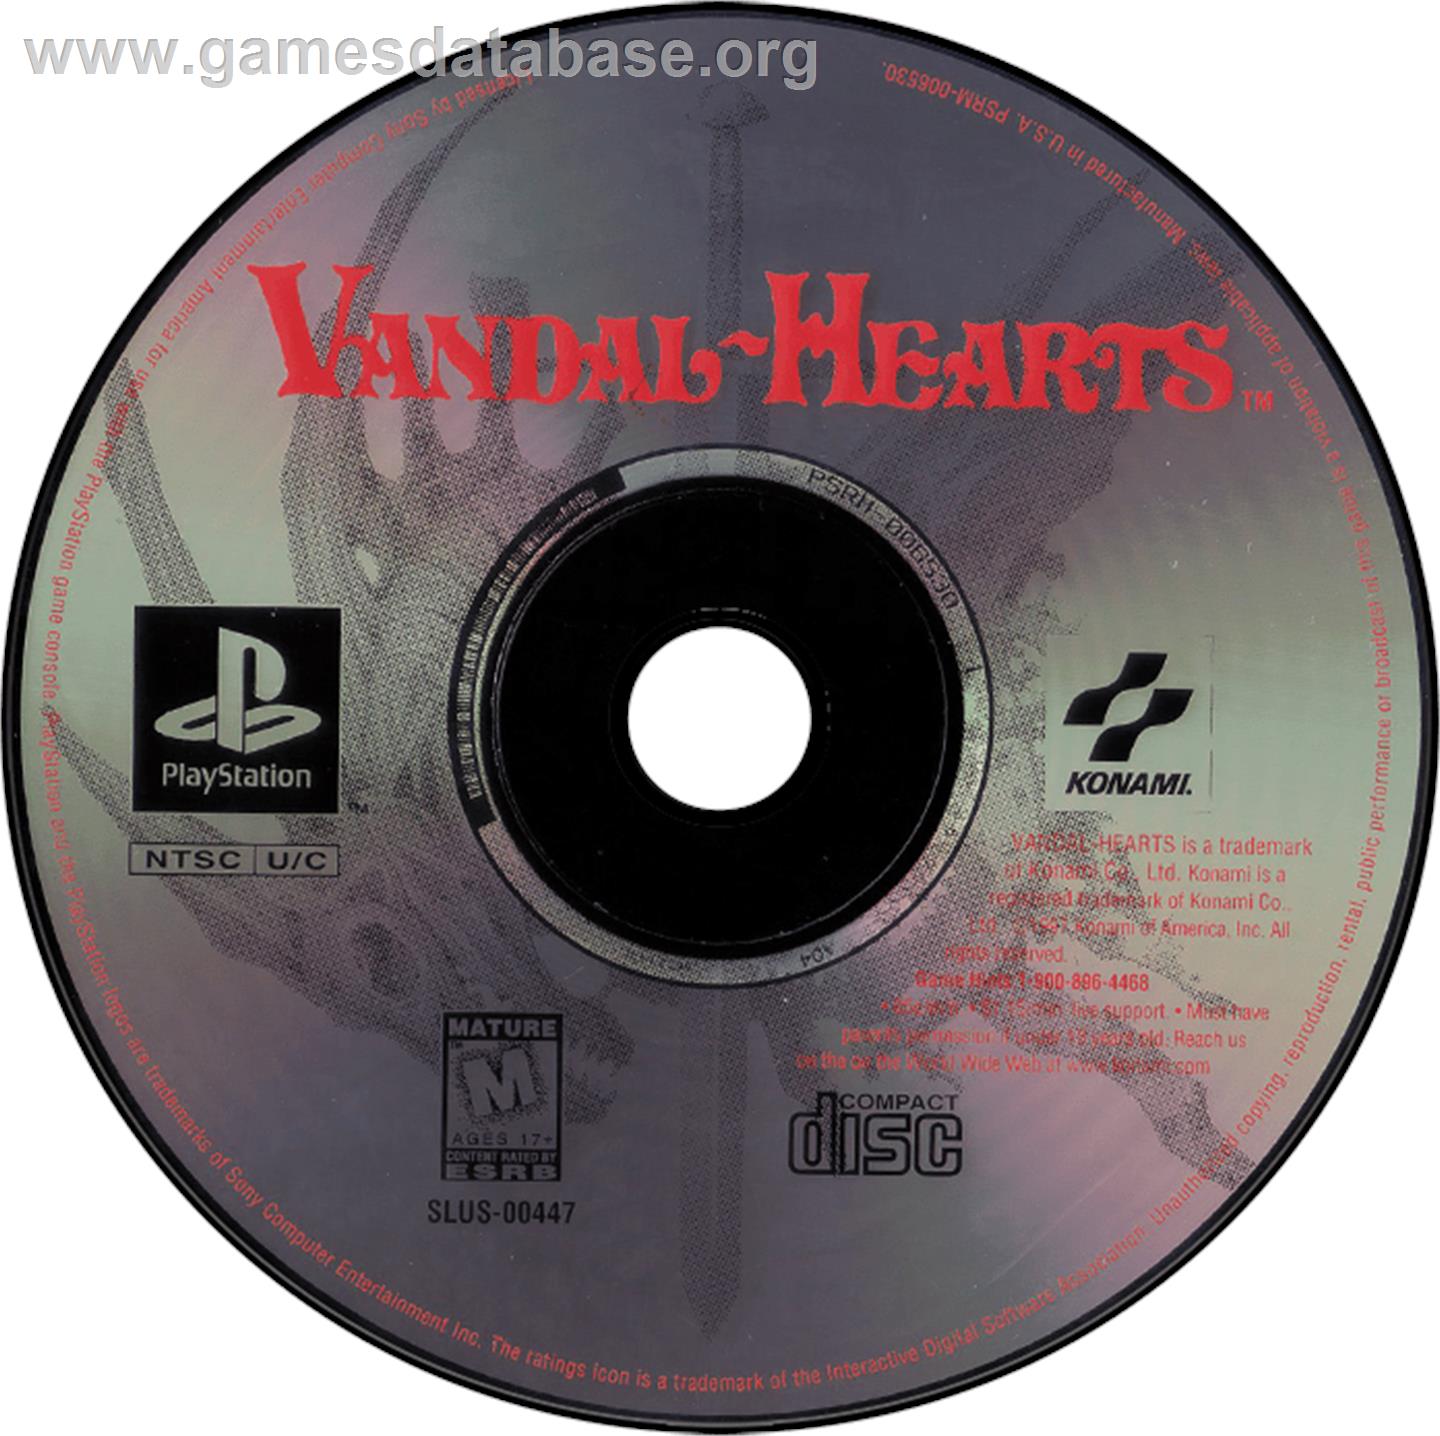 Vandal Hearts - Sony Playstation - Artwork - Disc